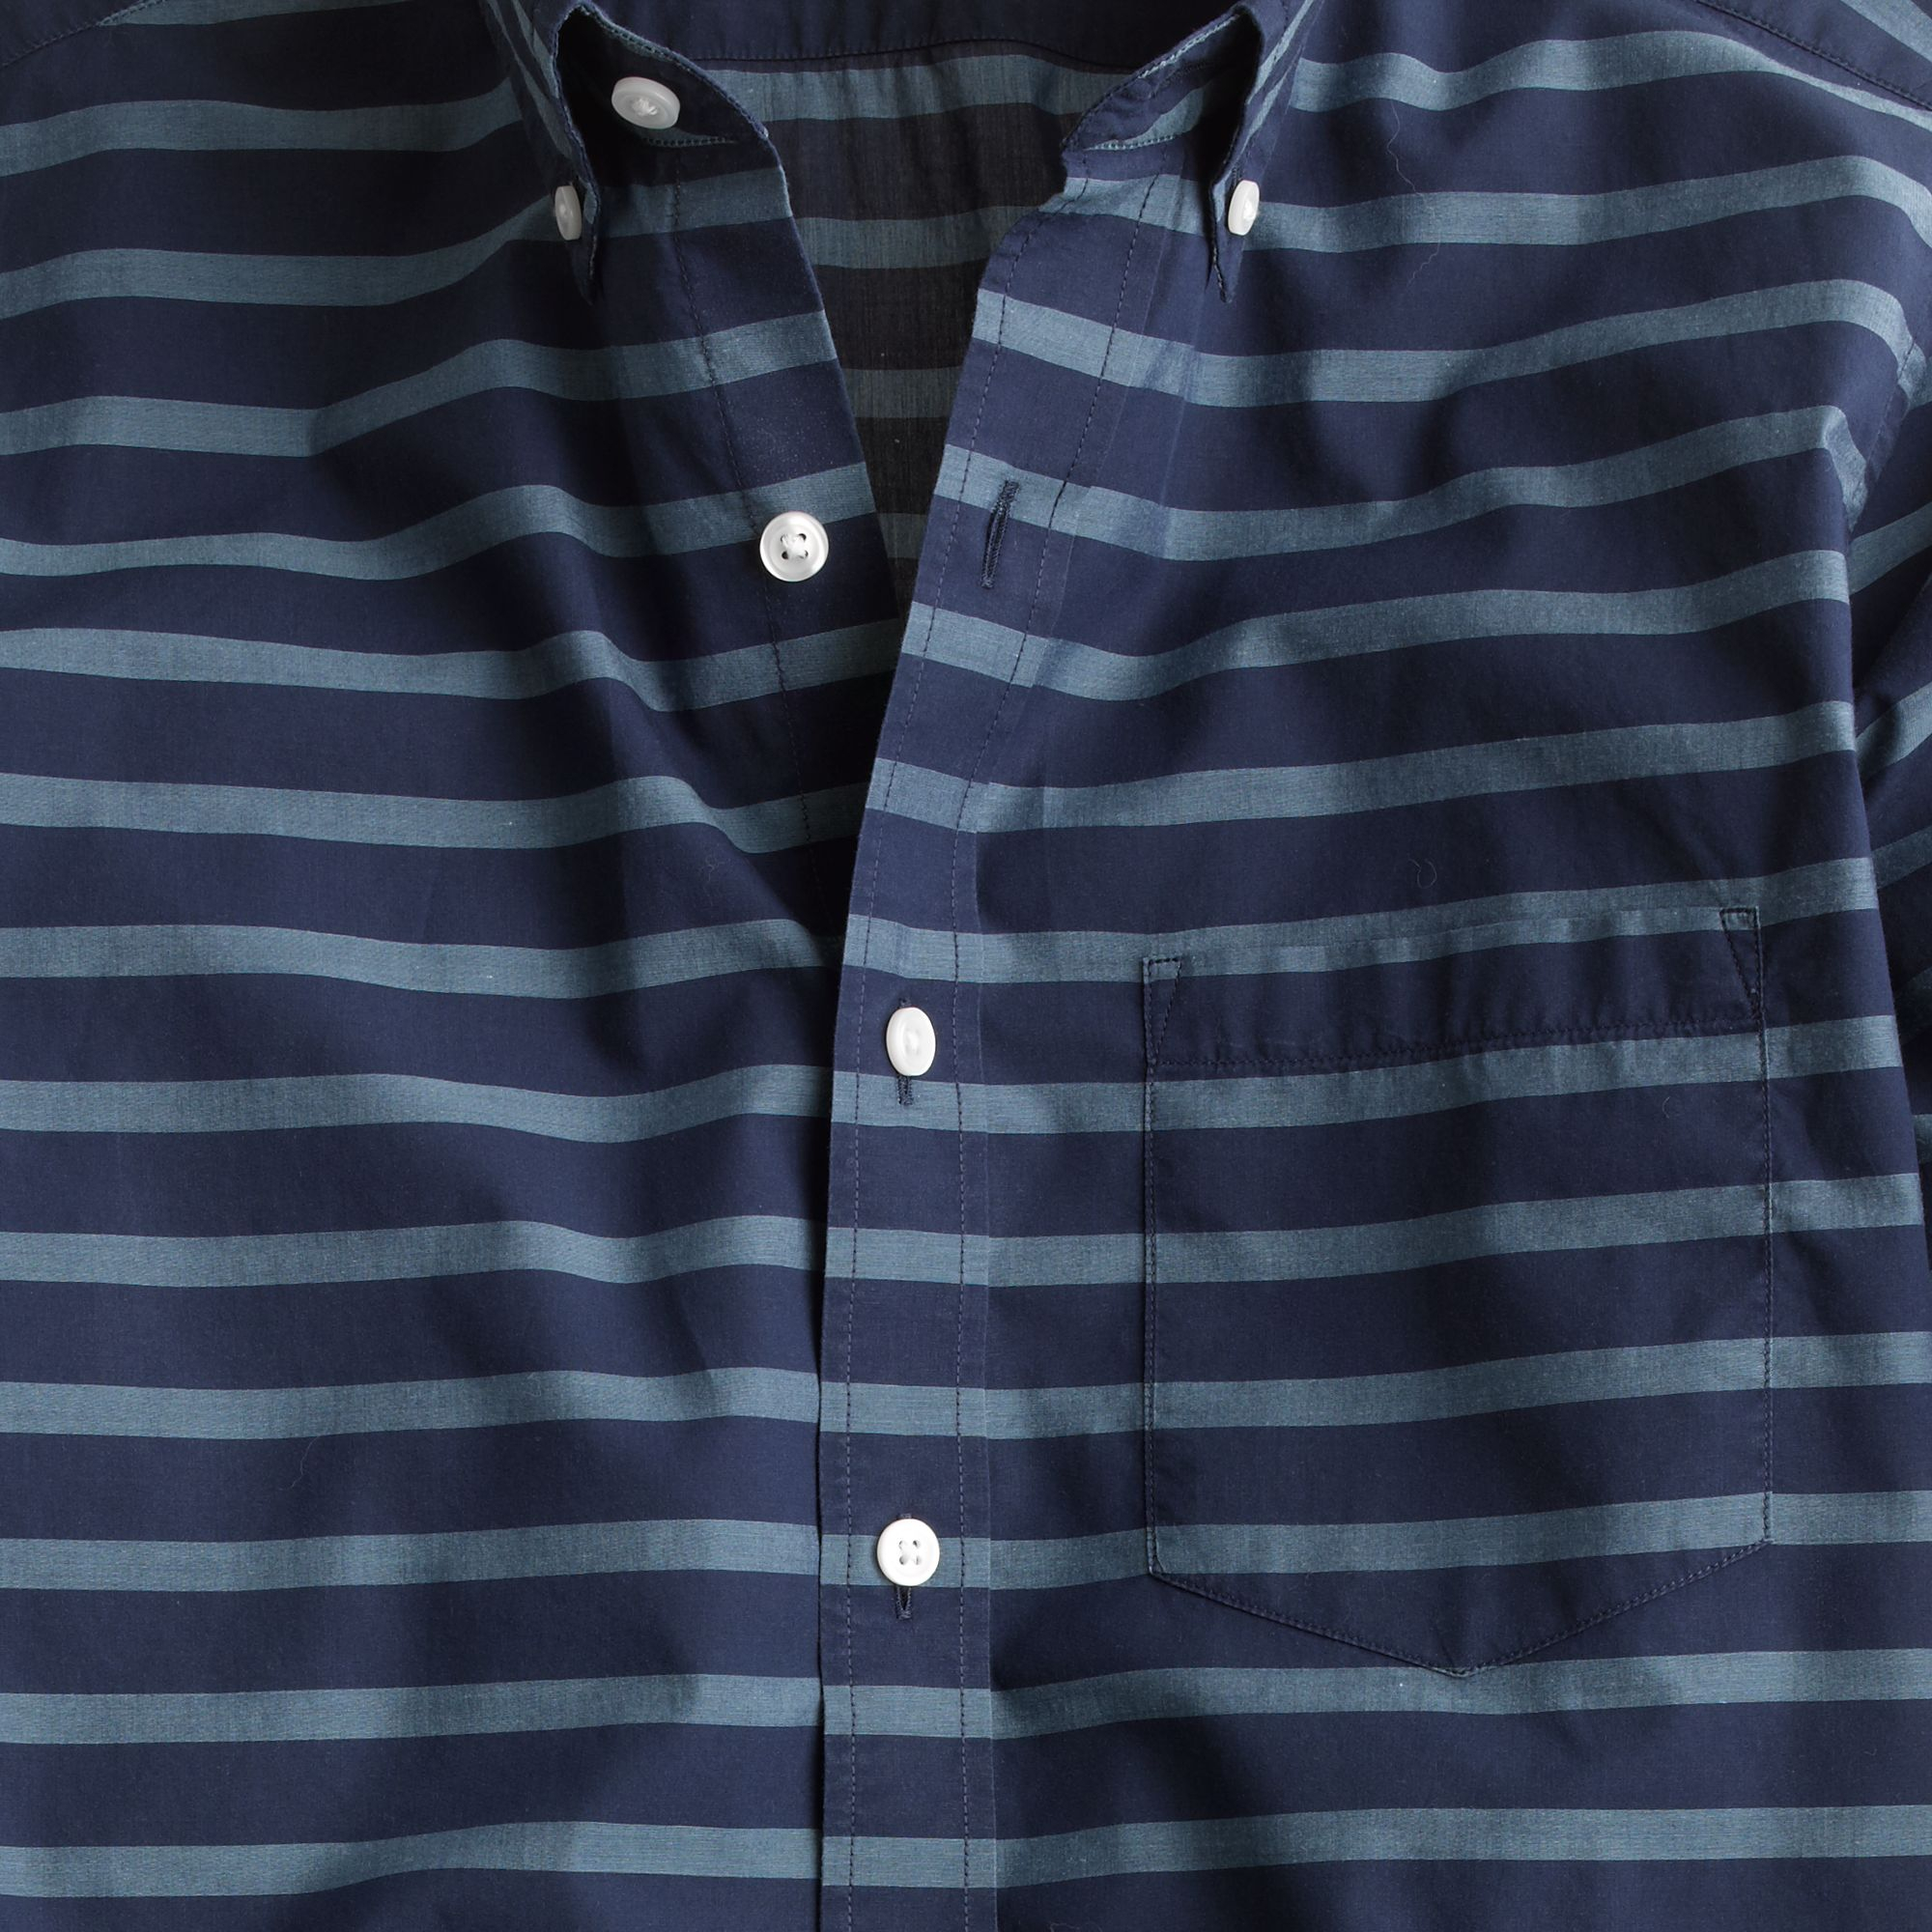 Lyst - J.Crew Lightweight Shirt in Deep Ocean Stripe in Blue for Men